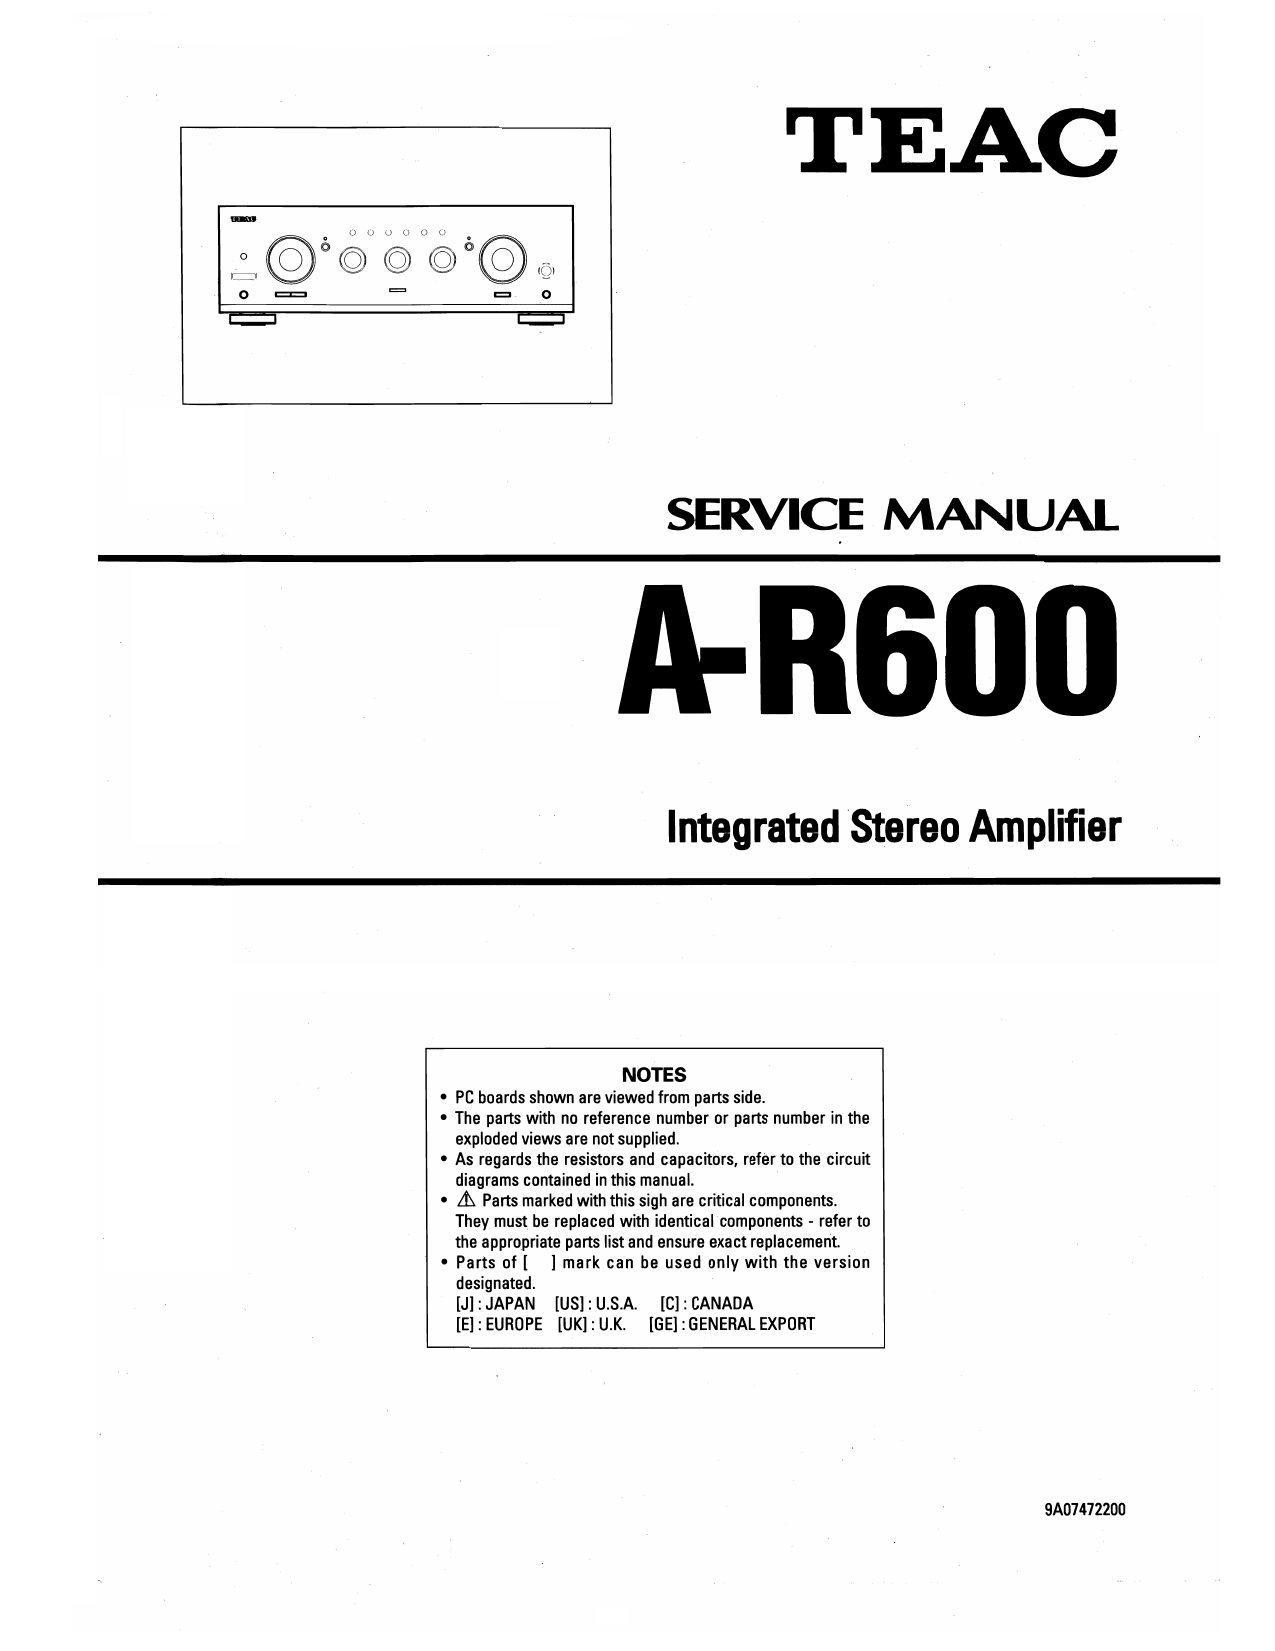 Teac A R600 User Manual Manualzz